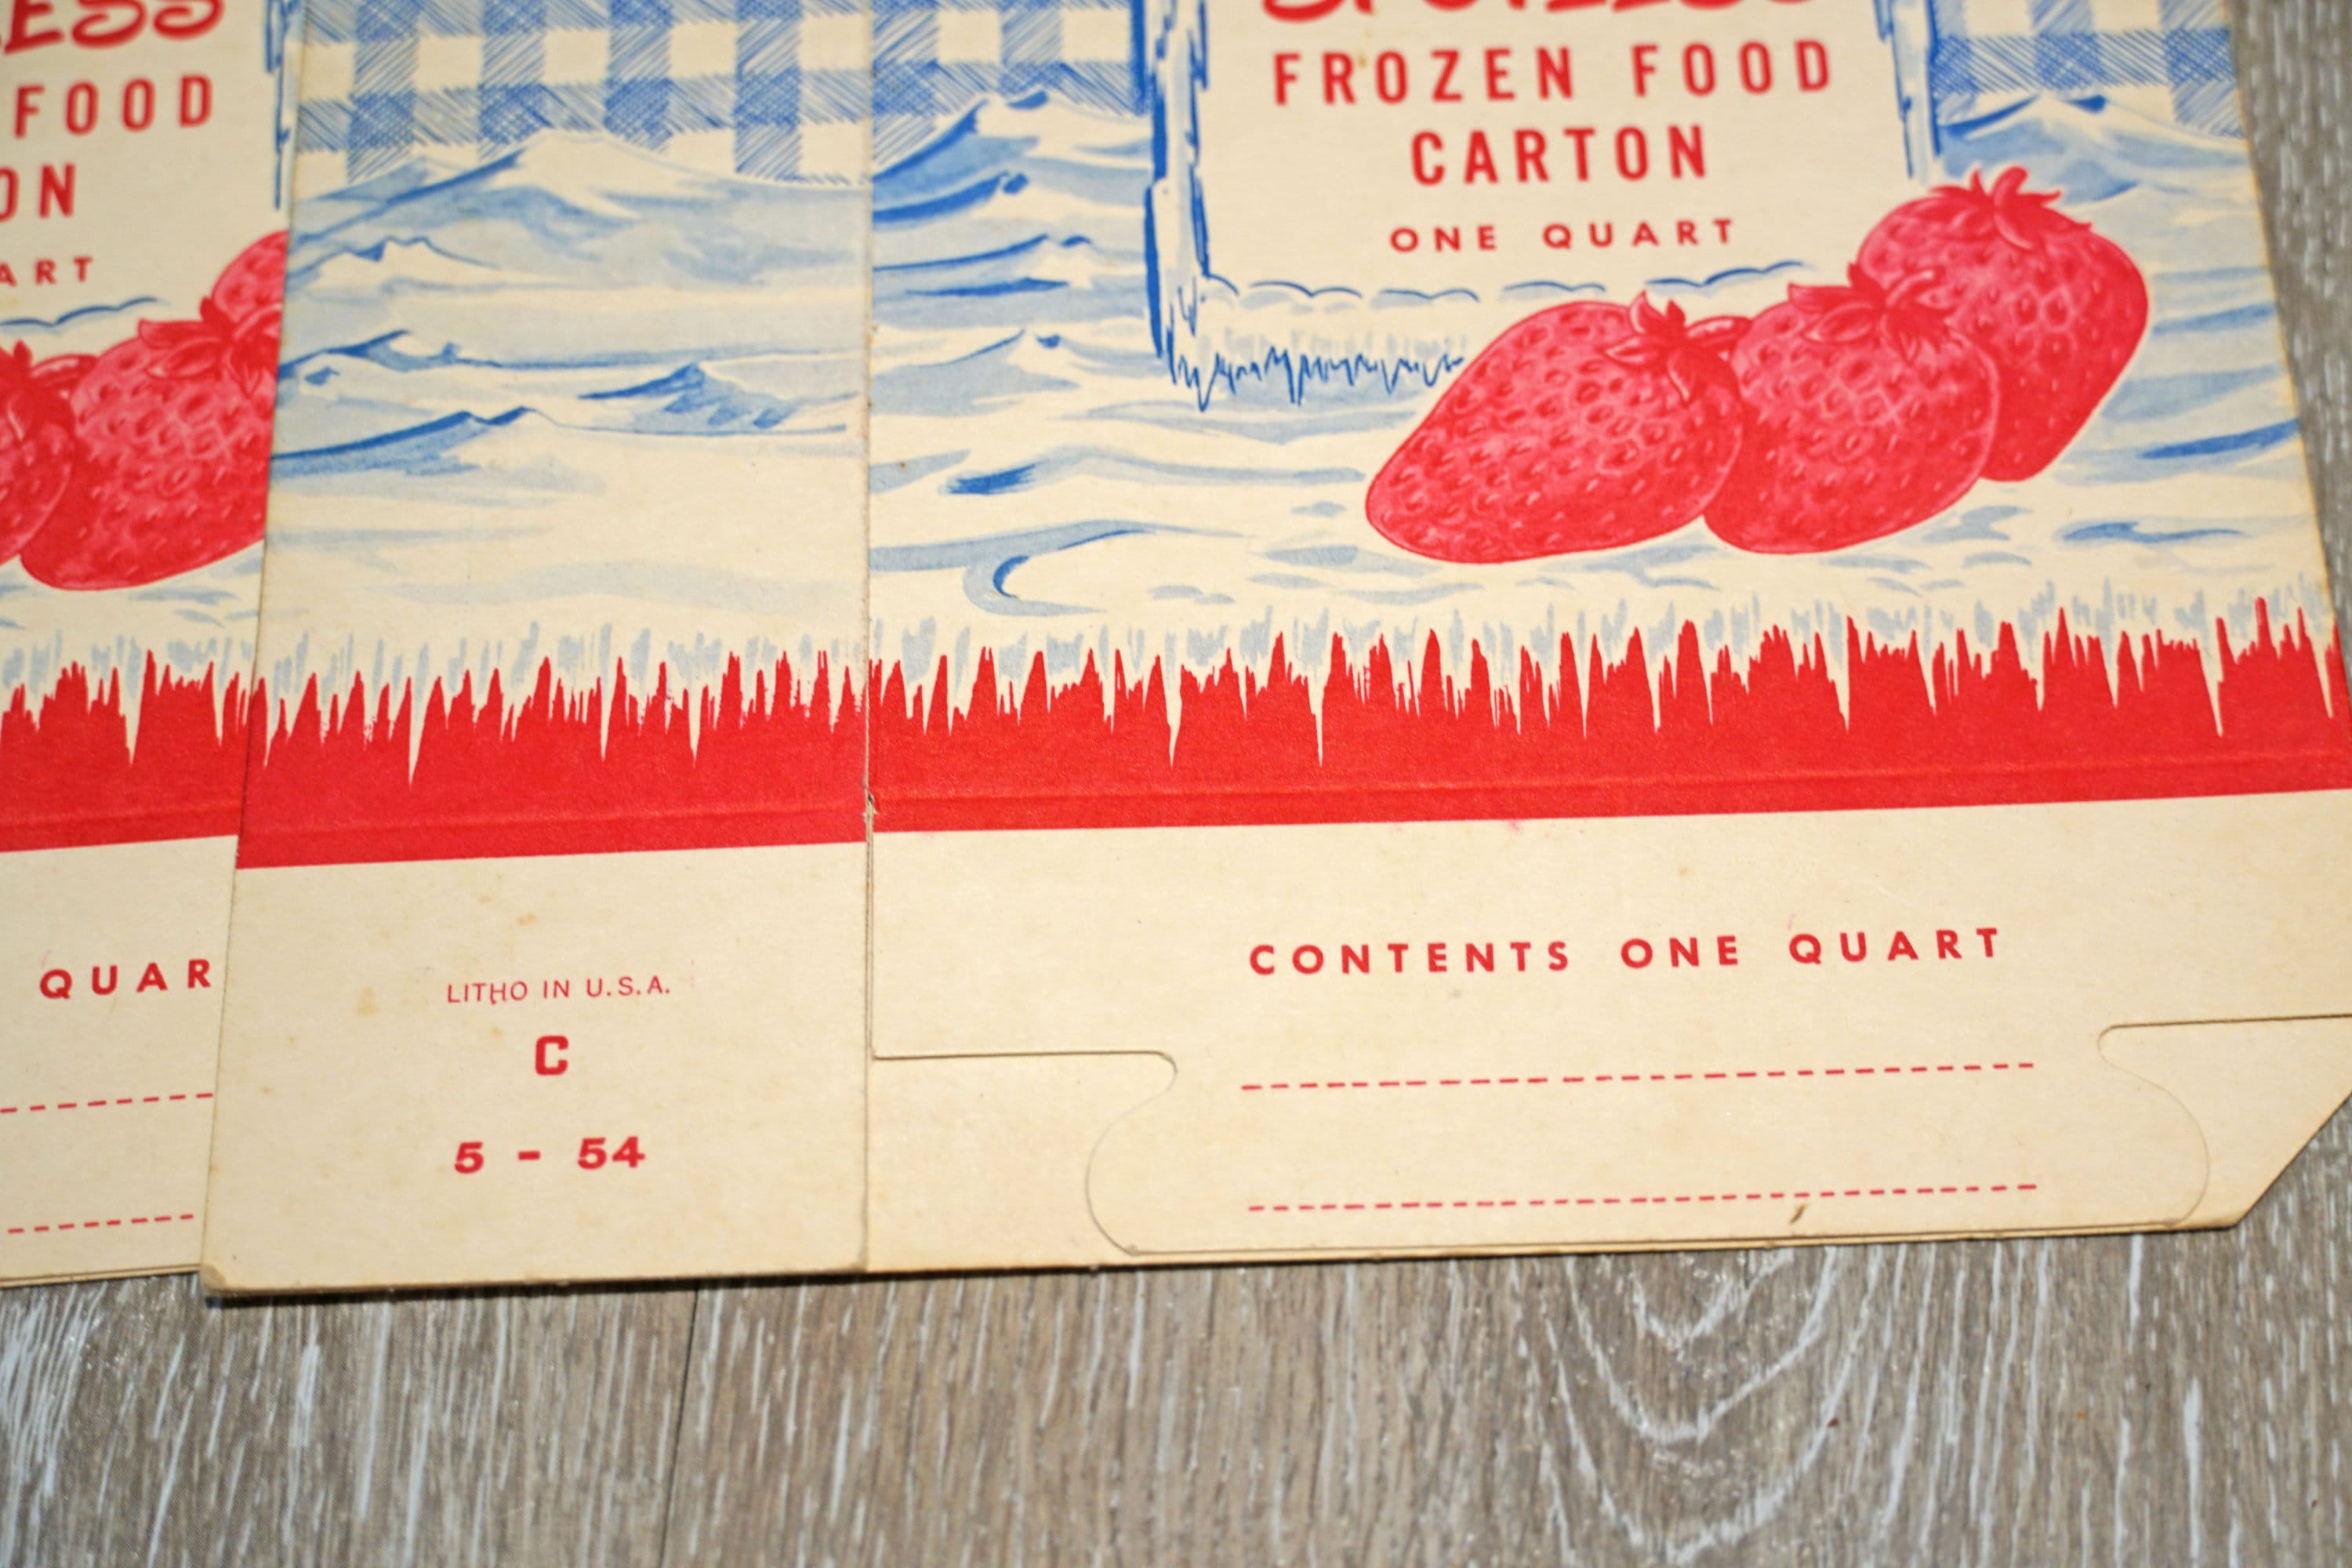 1950s Vintage Strawberry Ice Cream Pint Box Carton Retro Pink Blue